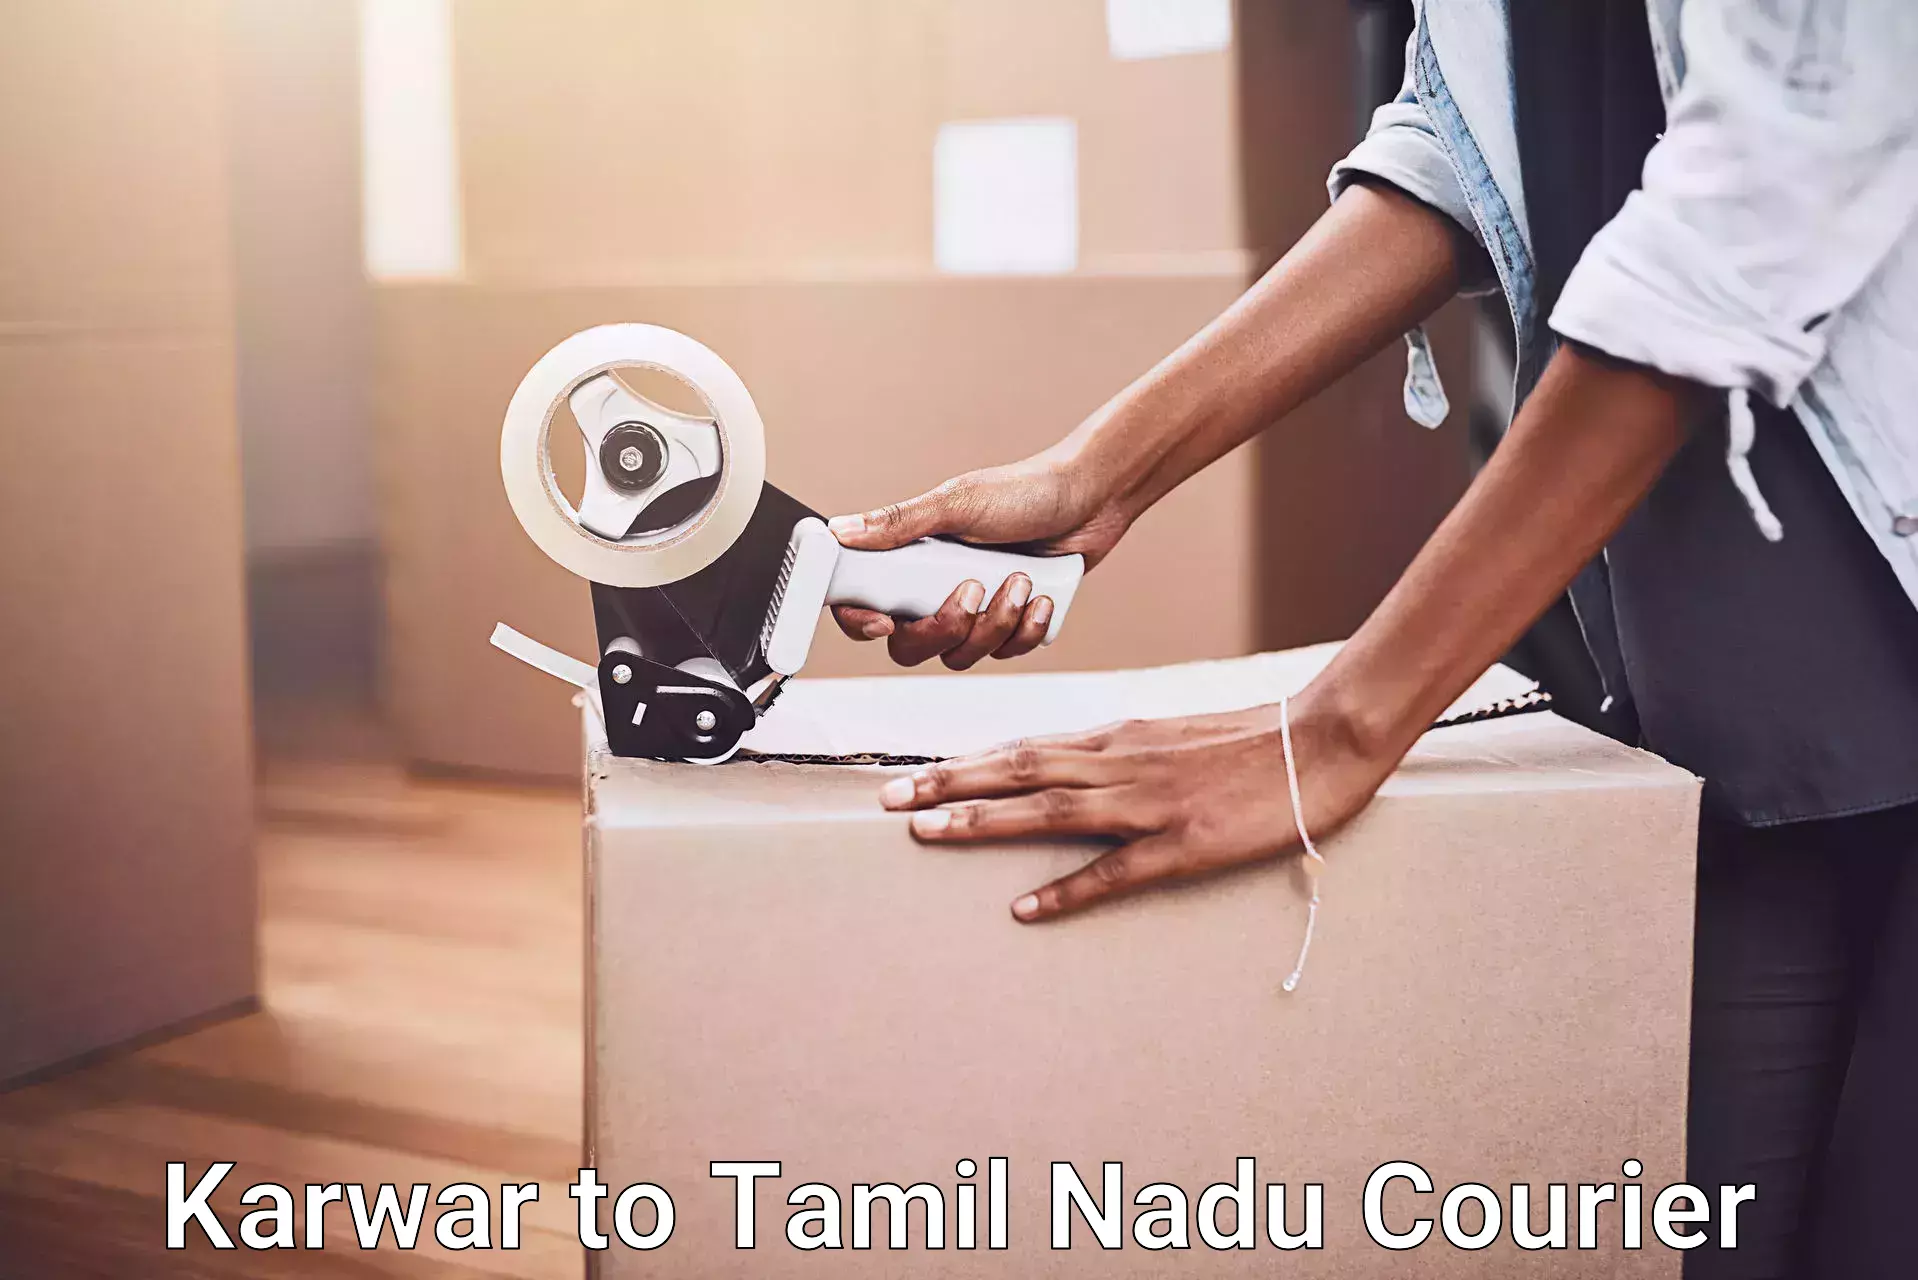 Moving service excellence Karwar to Tamil Nadu